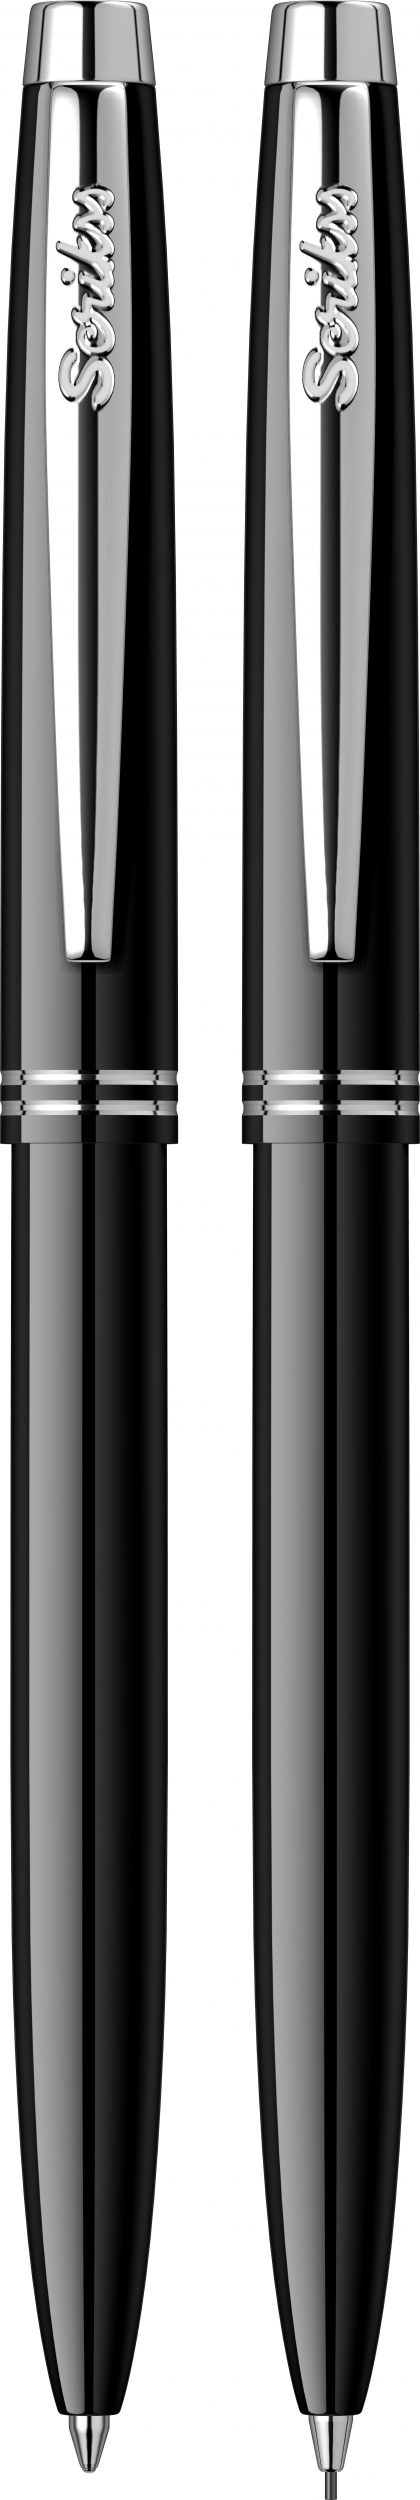 Комплект Scrikss Автоматична х-ка+Автоматичен молив Prestige, модел 81911, цвят Черен